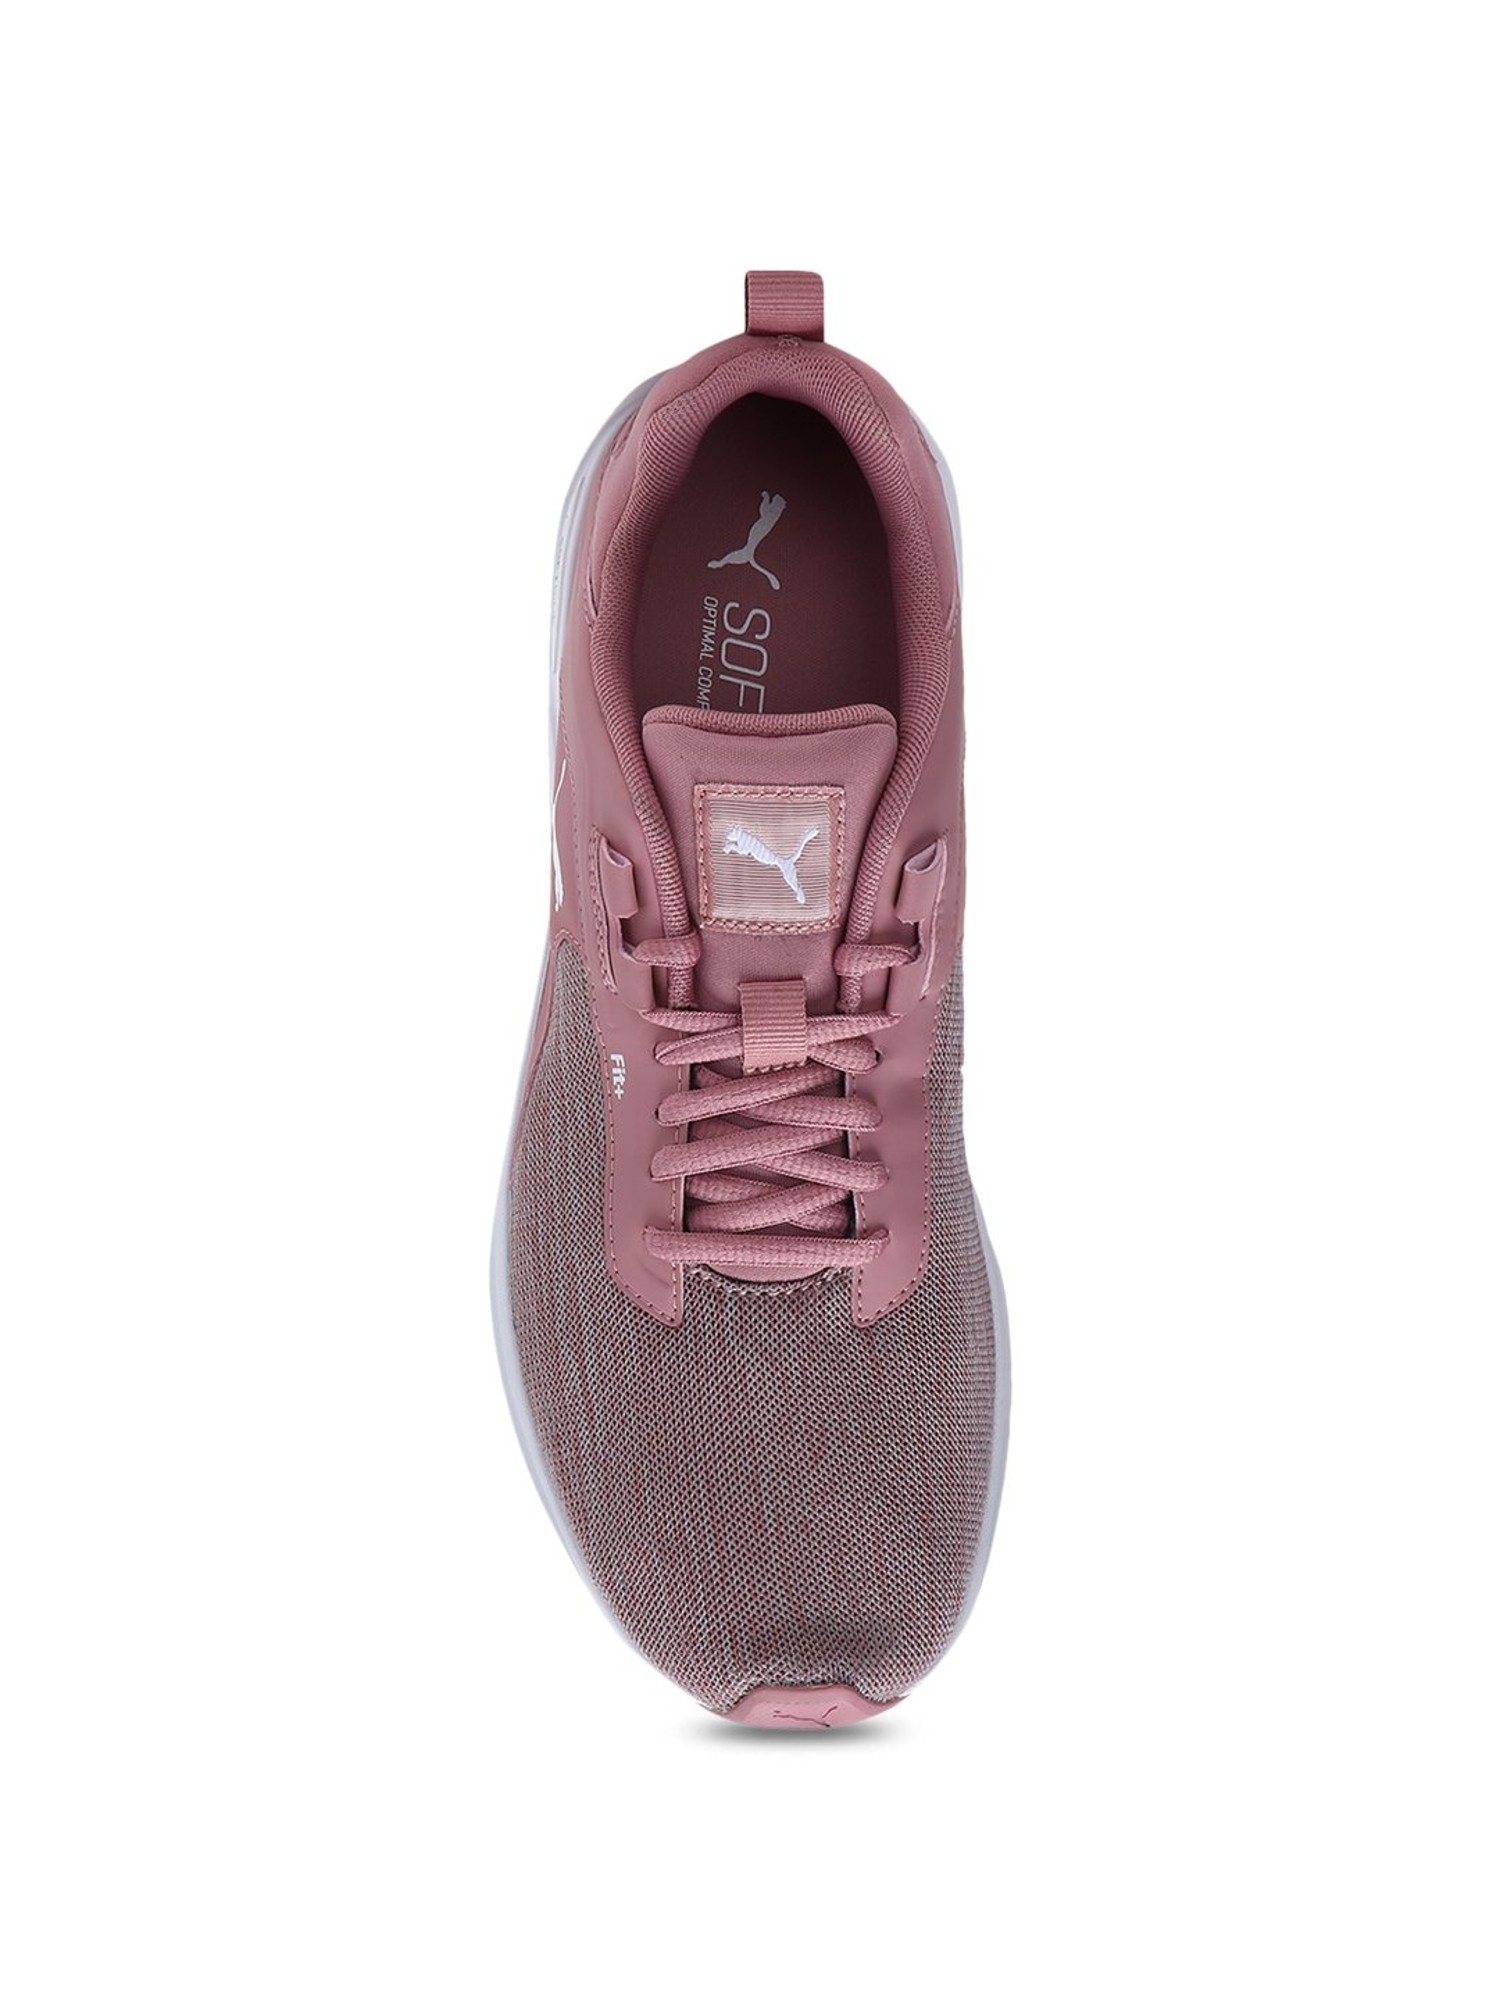 Buy Puma at Running for Price Alt @ 2 CLiQ Best Comet Men Pink Tata Shoes